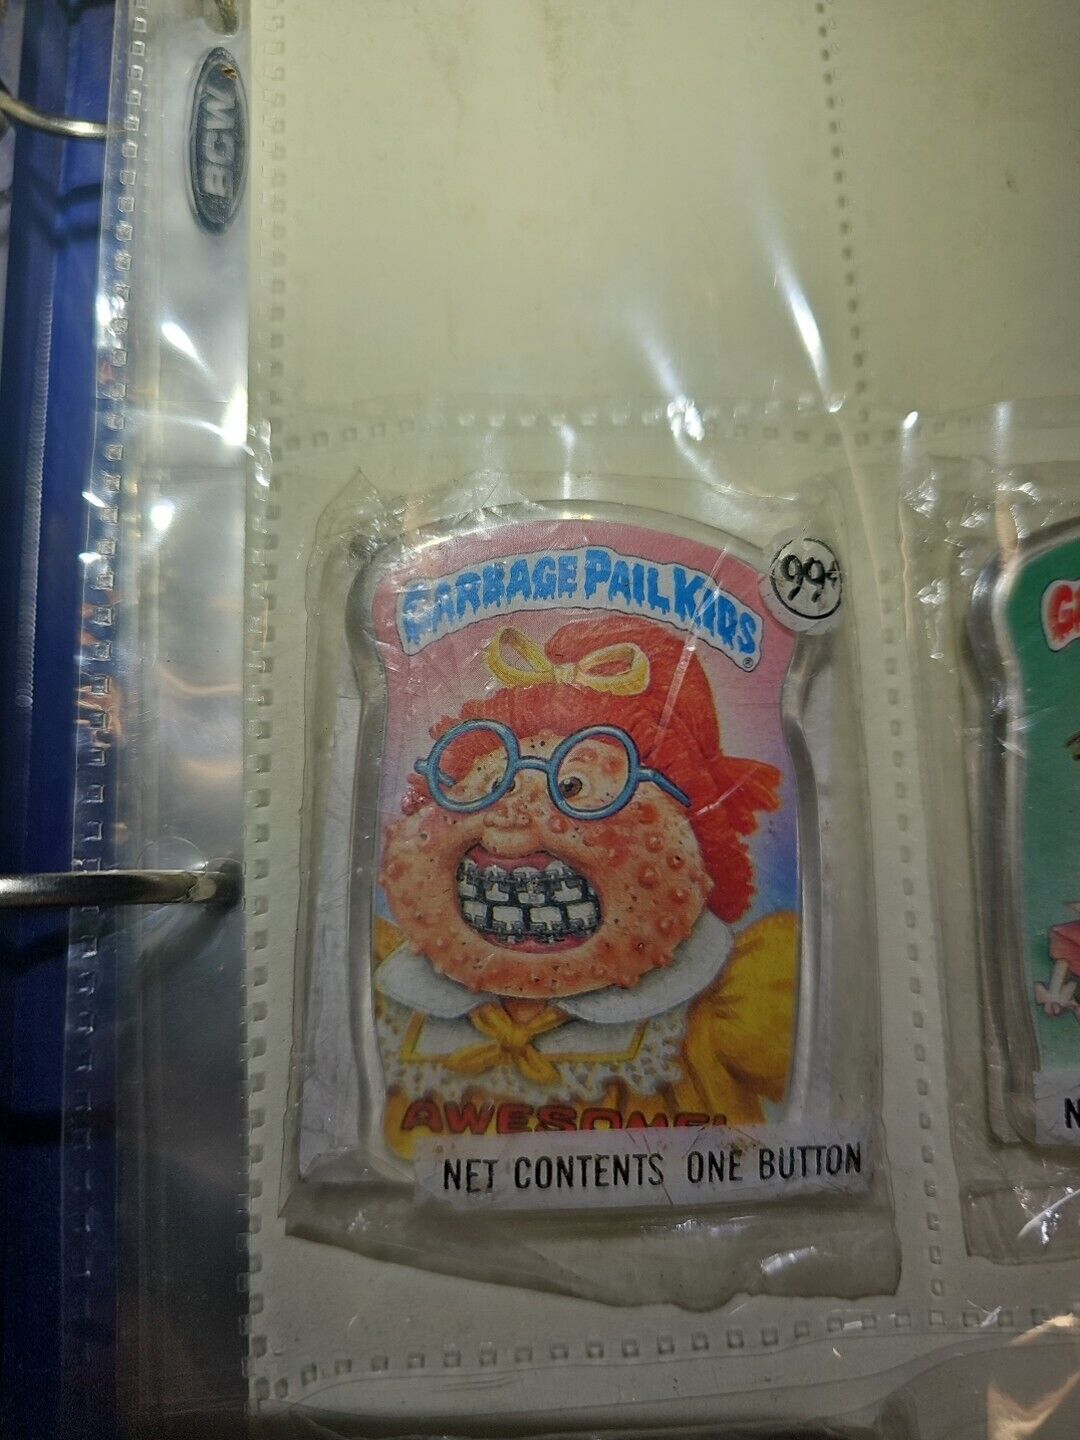 Lot Of 170 Original 1984 Garbage Pail Kids Cards, 5 Rare Gpk Buttons